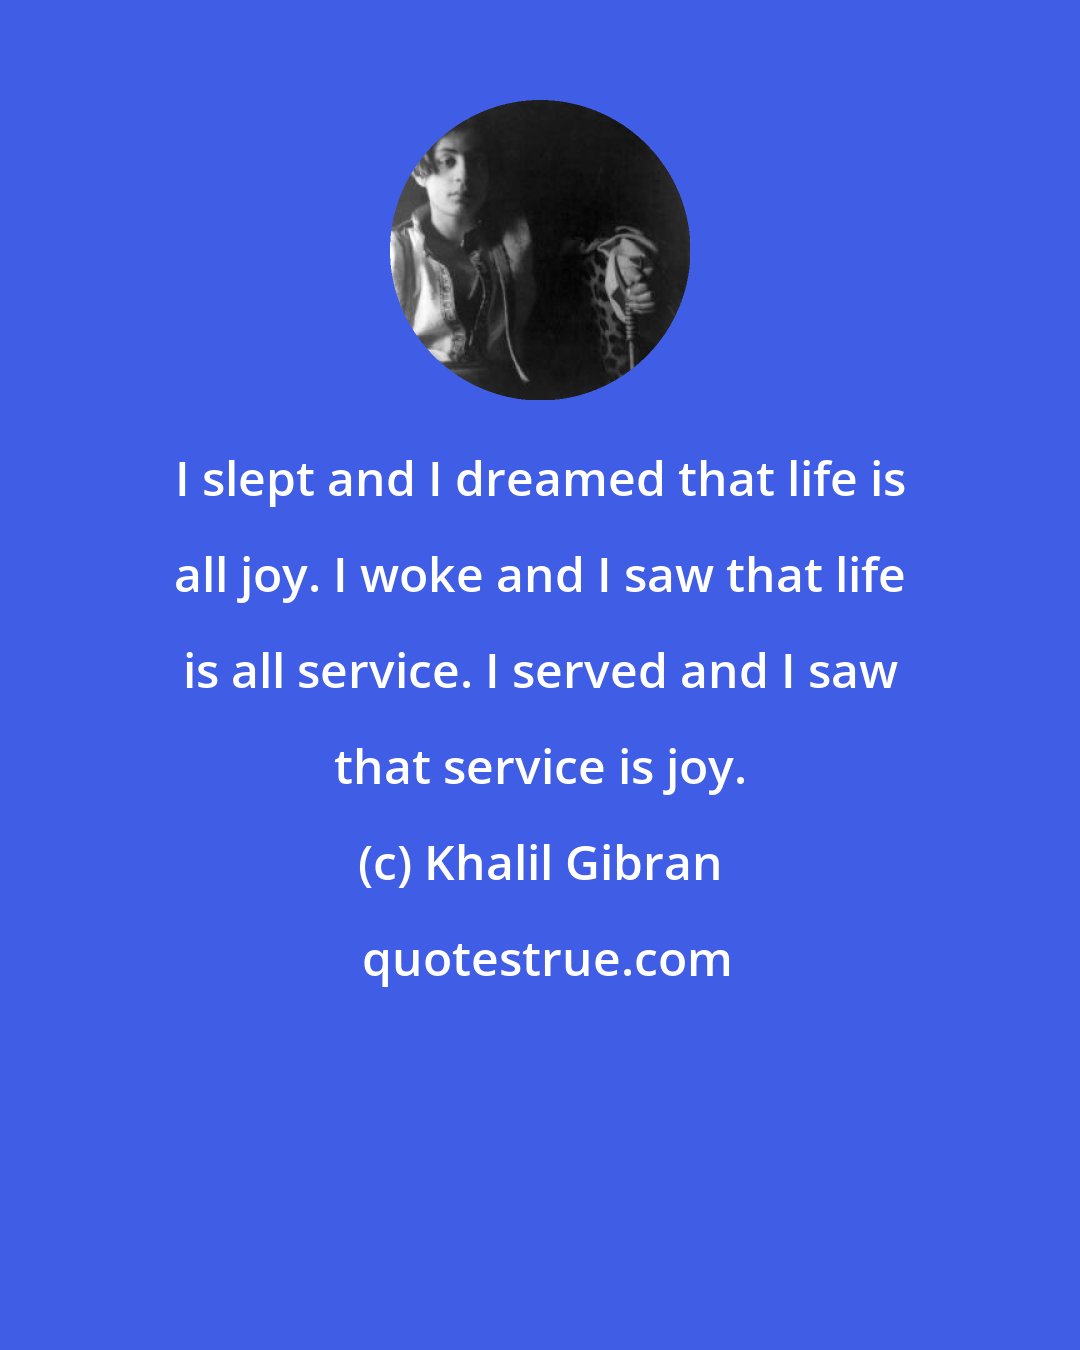 Khalil Gibran: I slept and I dreamed that life is all joy. I woke and I saw that life is all service. I served and I saw that service is joy.